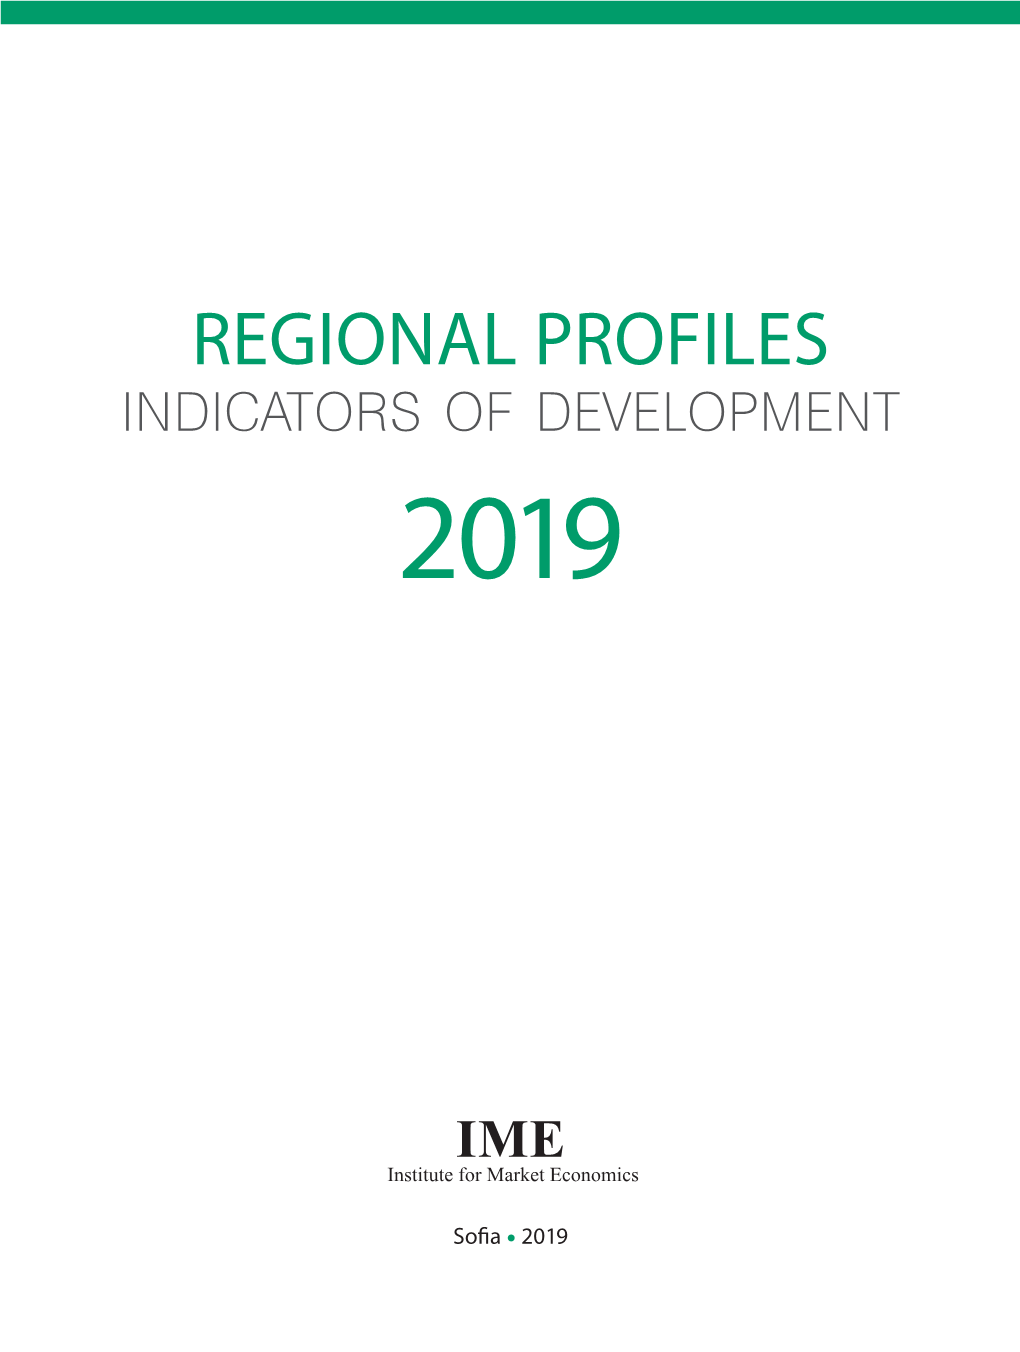 Regional Profiles Indicators of Development 2019